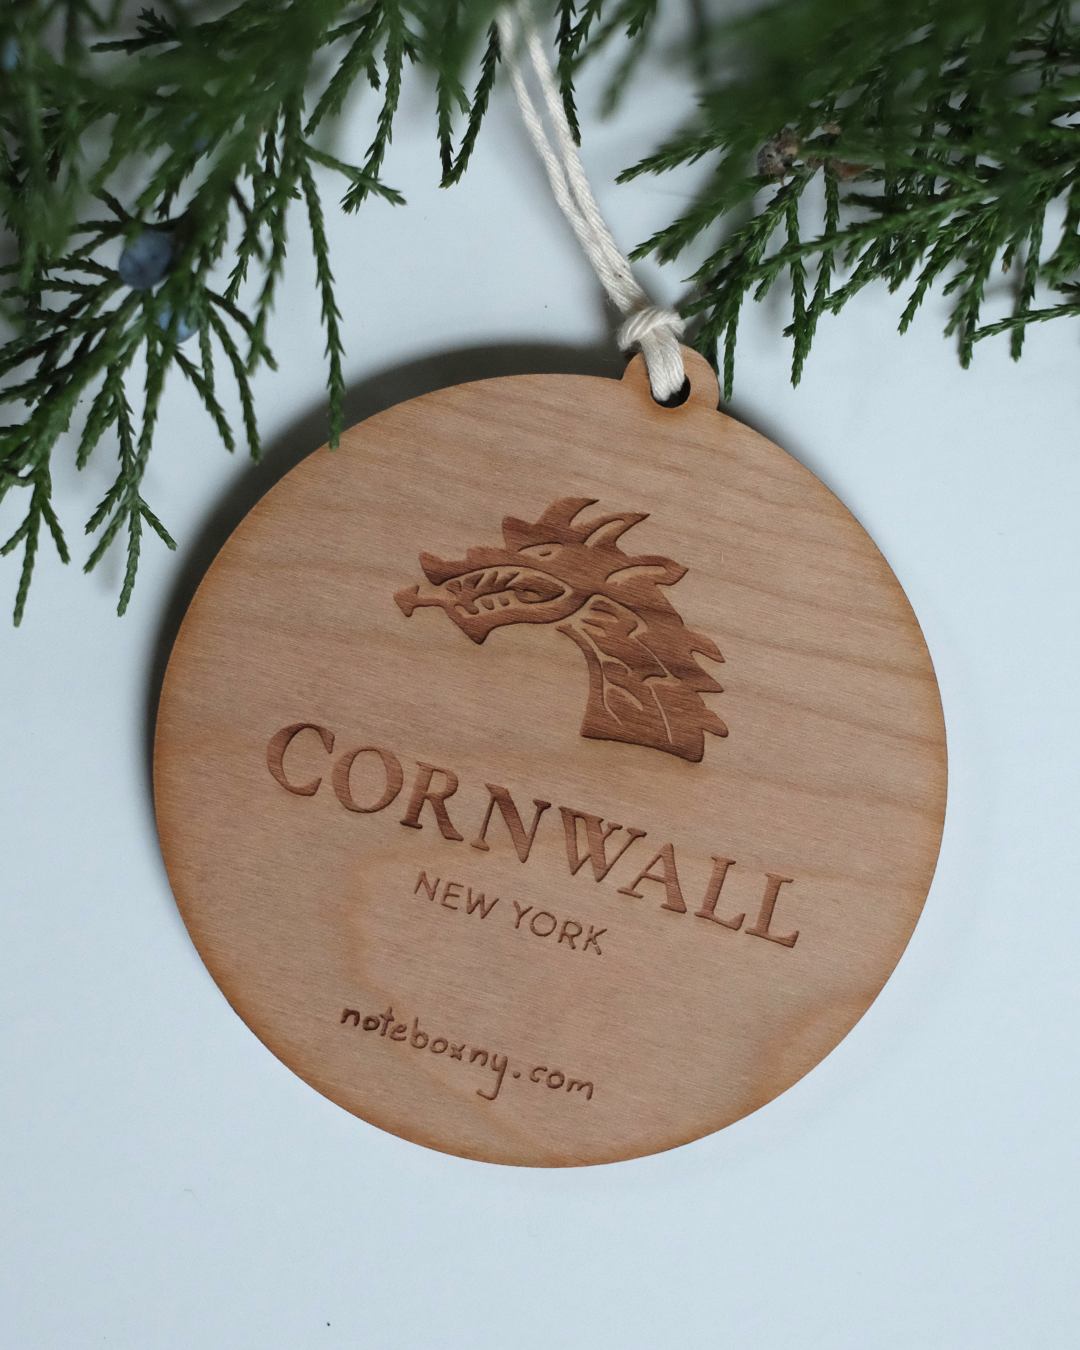 Cornwall Ornament